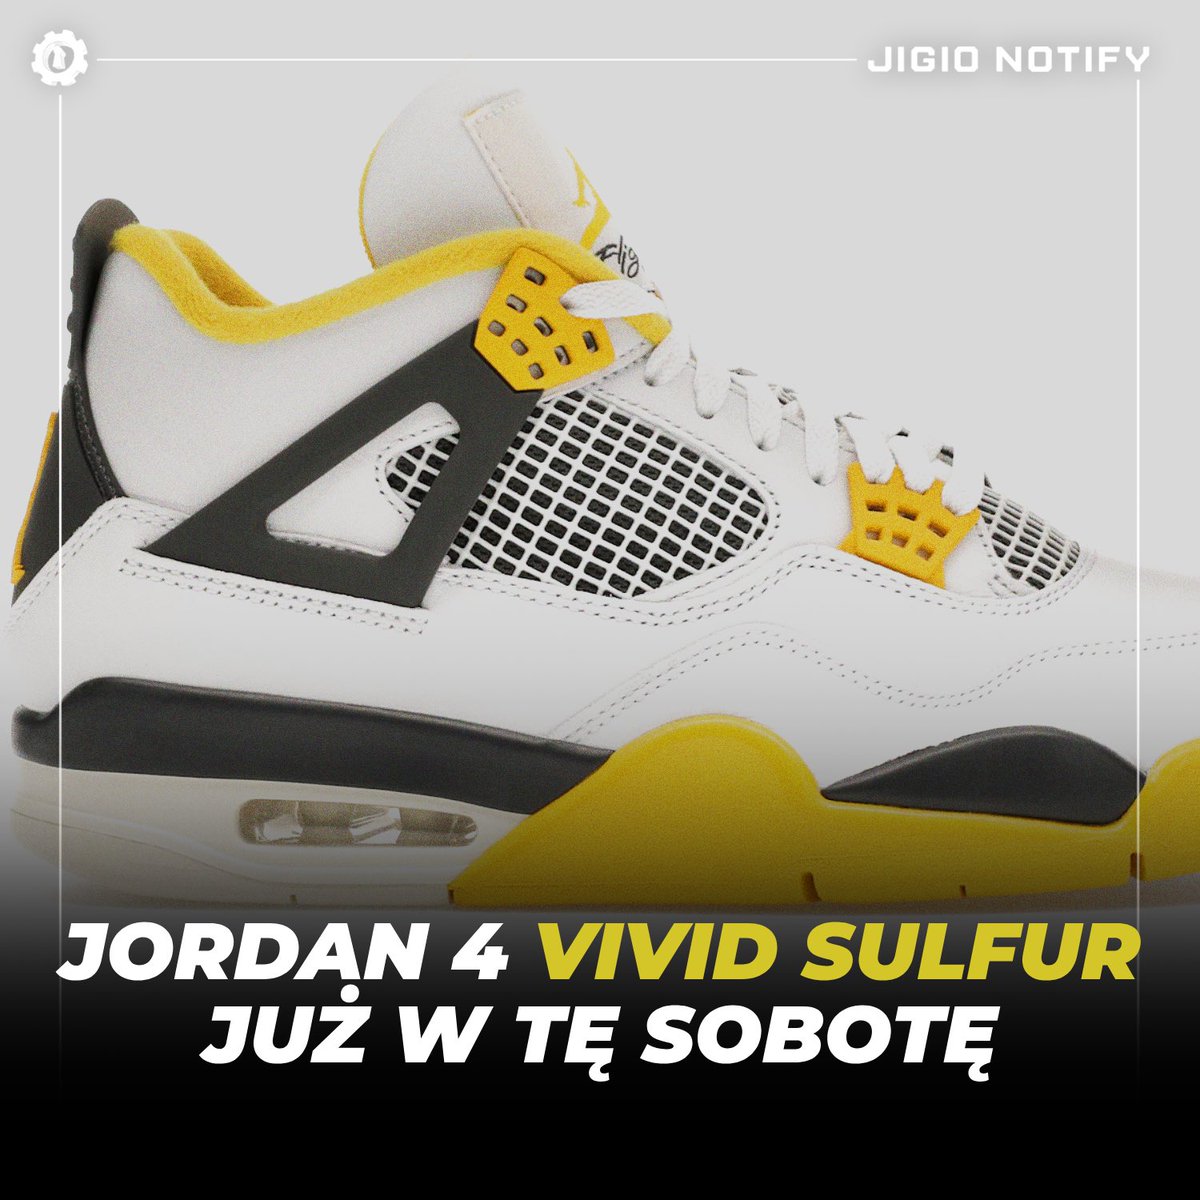 Jordan 4 Vivid Sulfur coming this Saturday! Cop or Drop? ☀️ linktr.ee/jigionotify